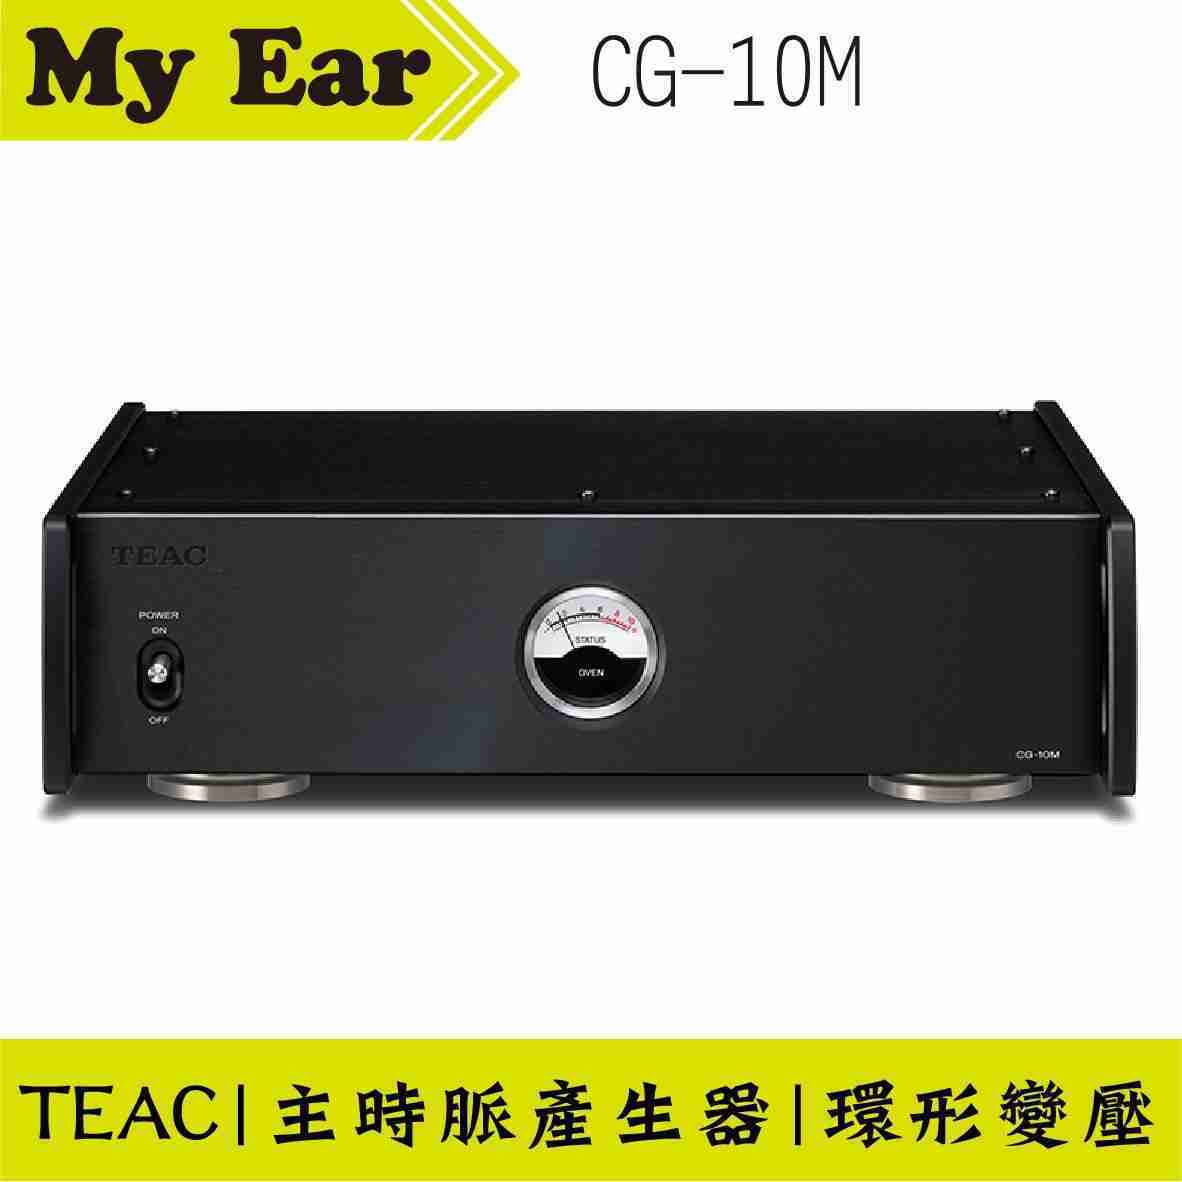 TEAC CG-10M 主時脈產生器 黑色 | My Ear 耳機專門店